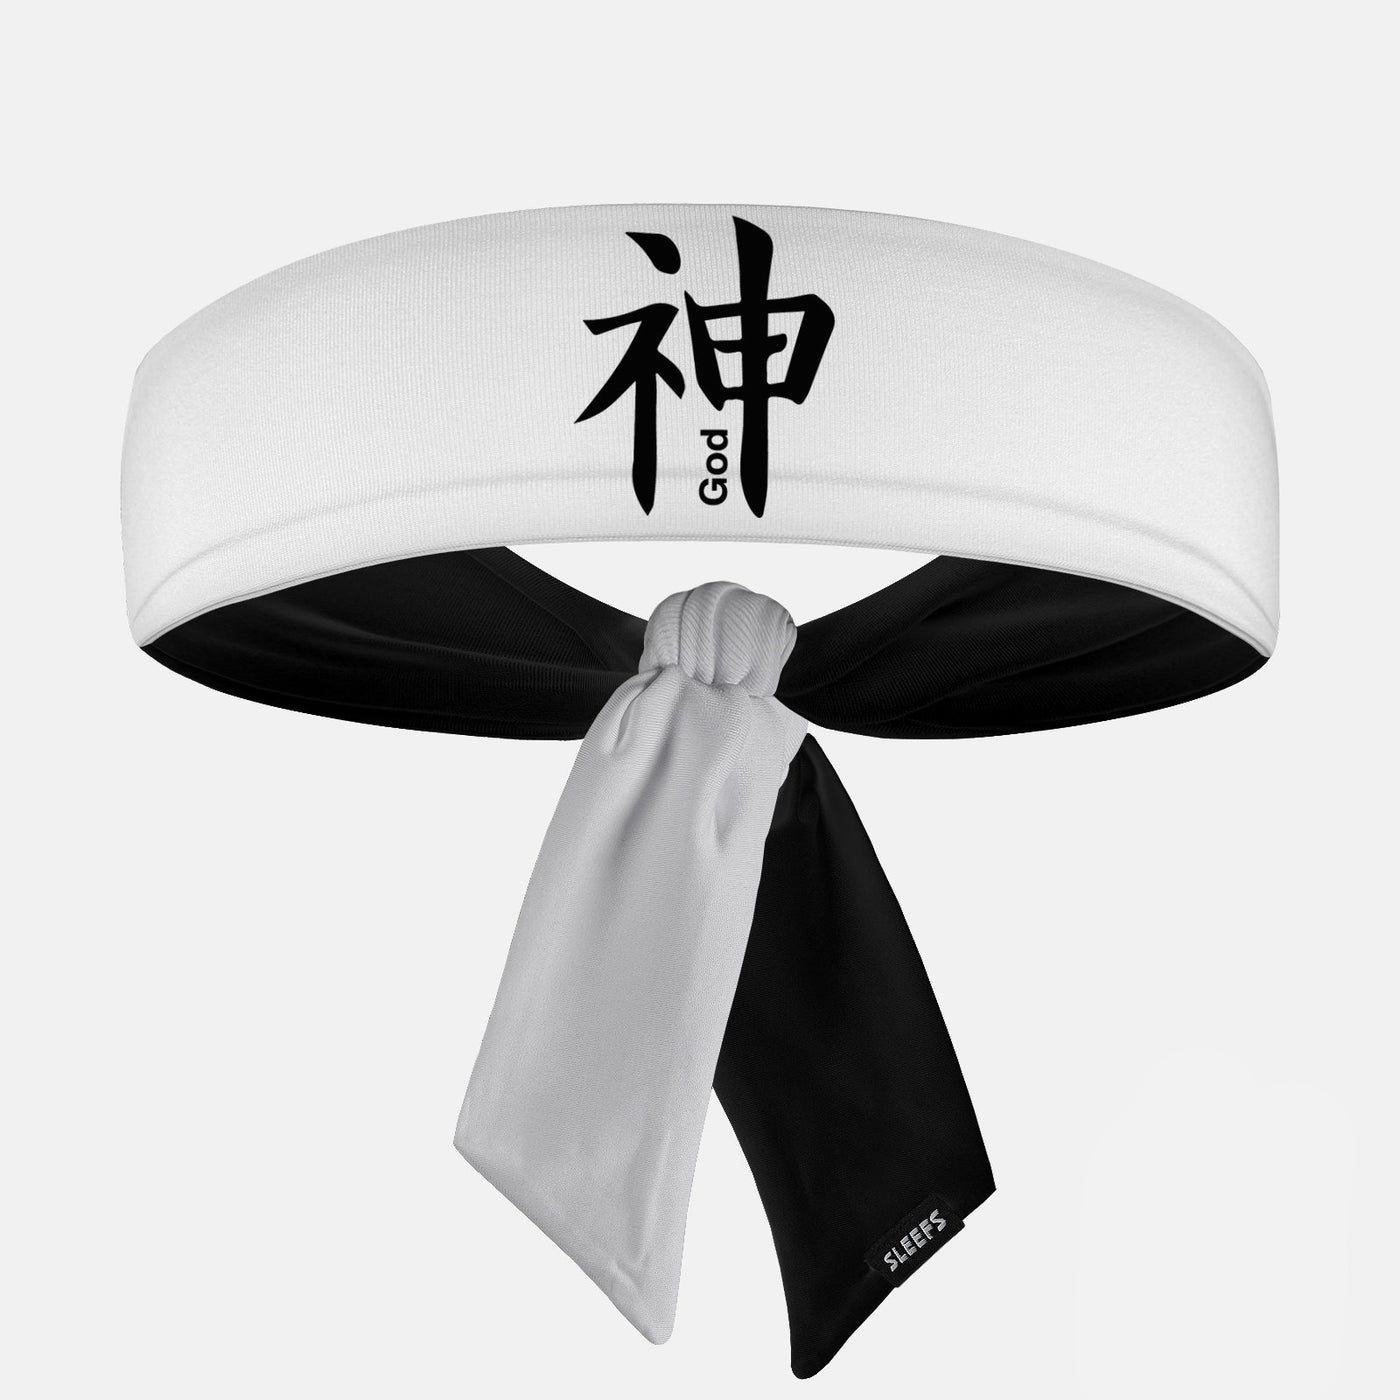 Kami / God Ninja Headband